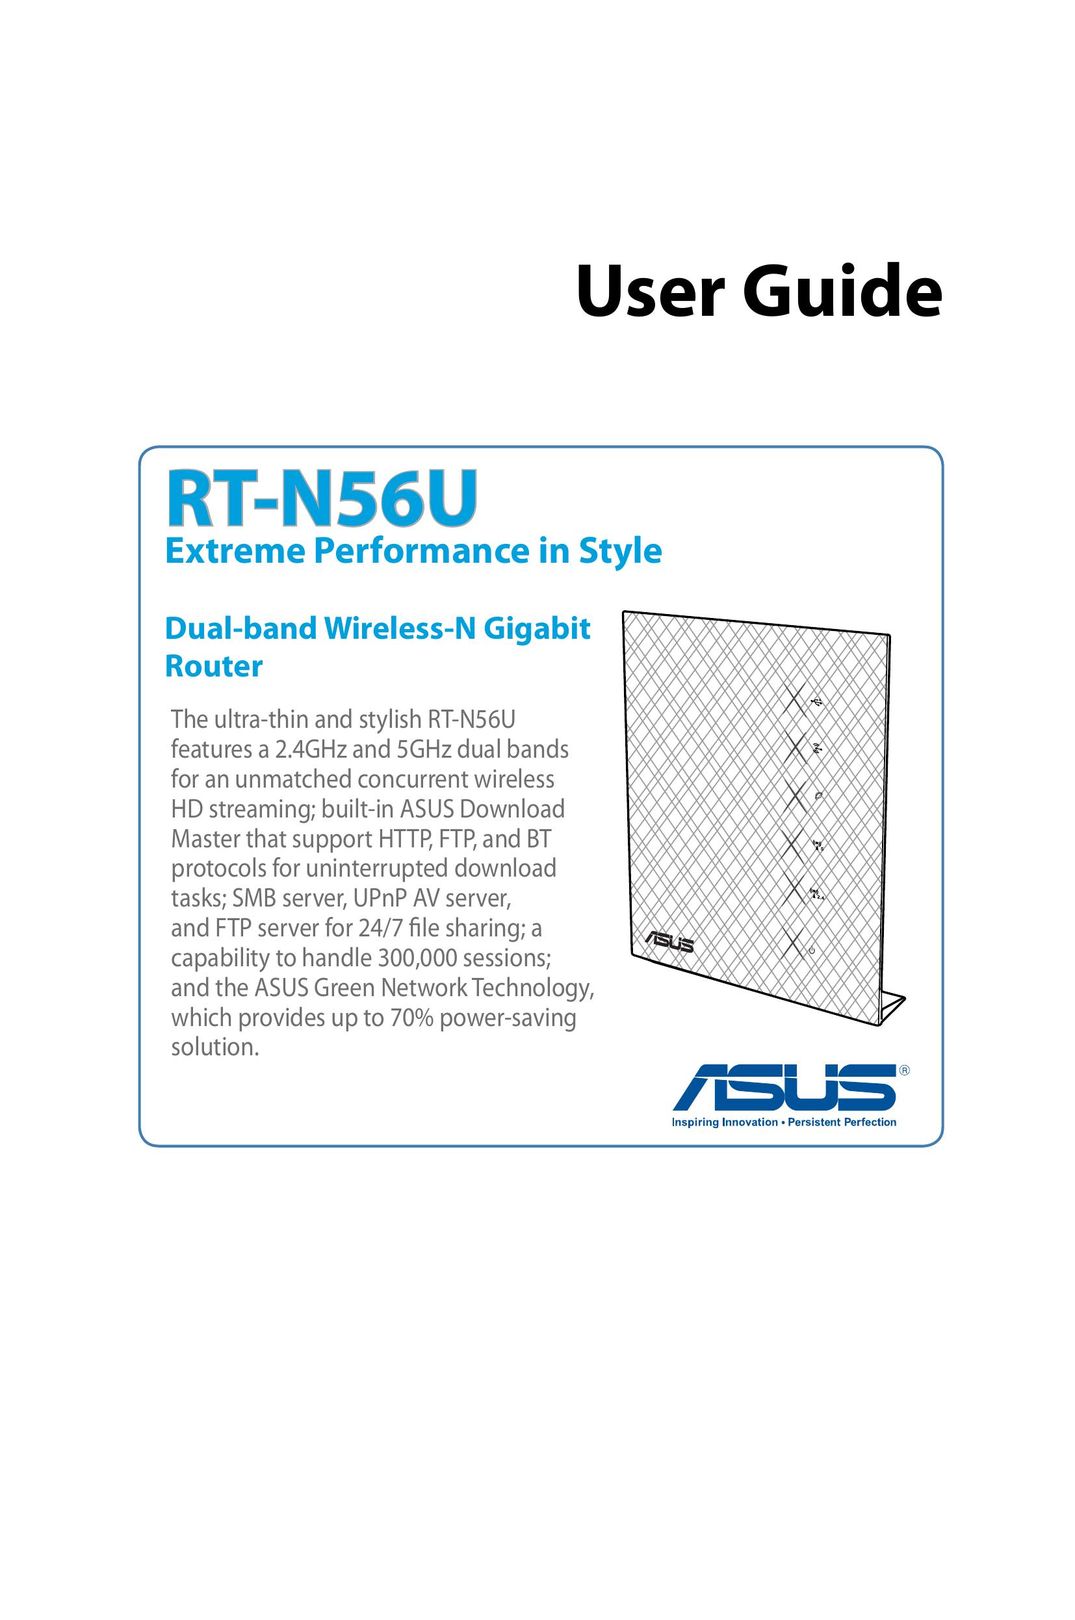 Asus RTN56U Network Router User Manual